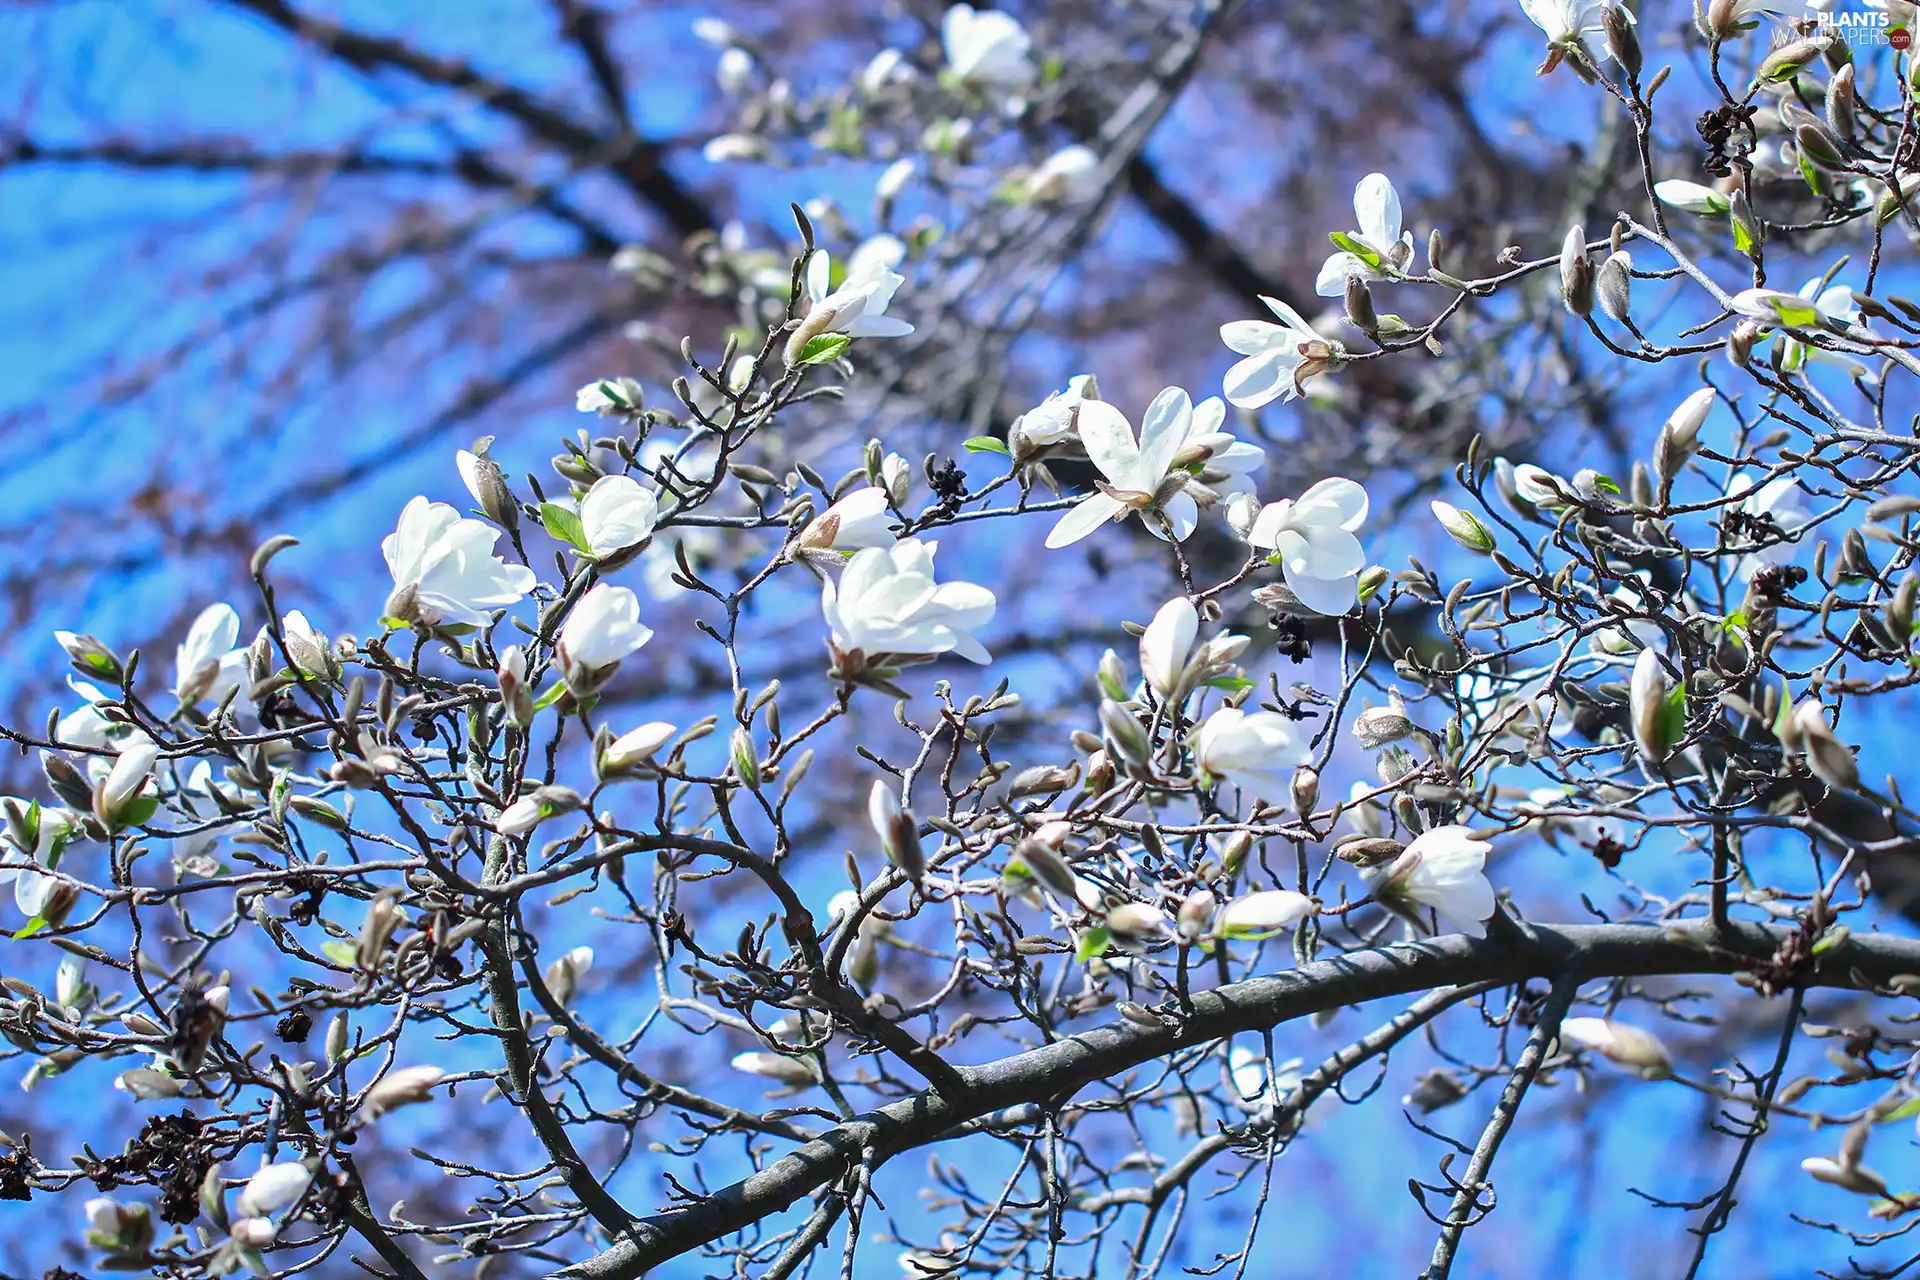 Magnolia, Bush, Flowers, White